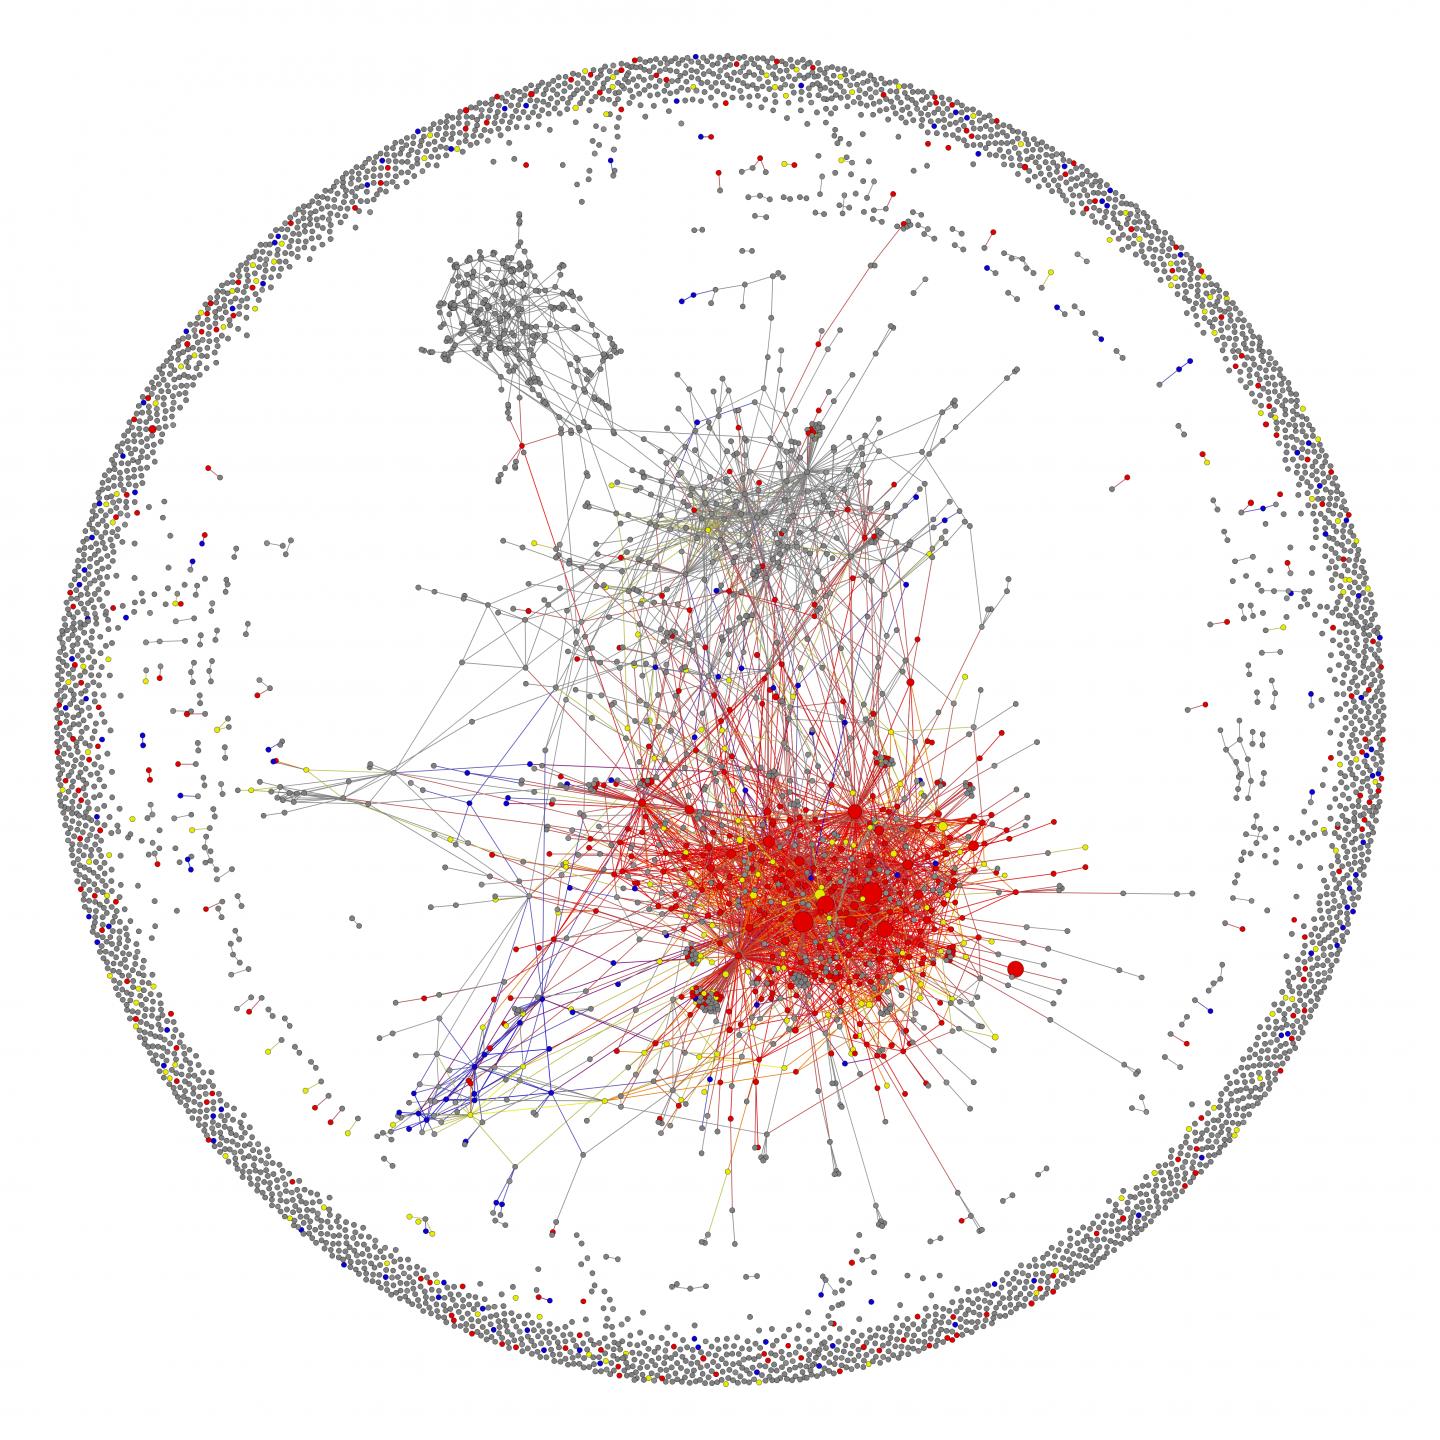 Visualization of 'Friendships' between Online Community Members